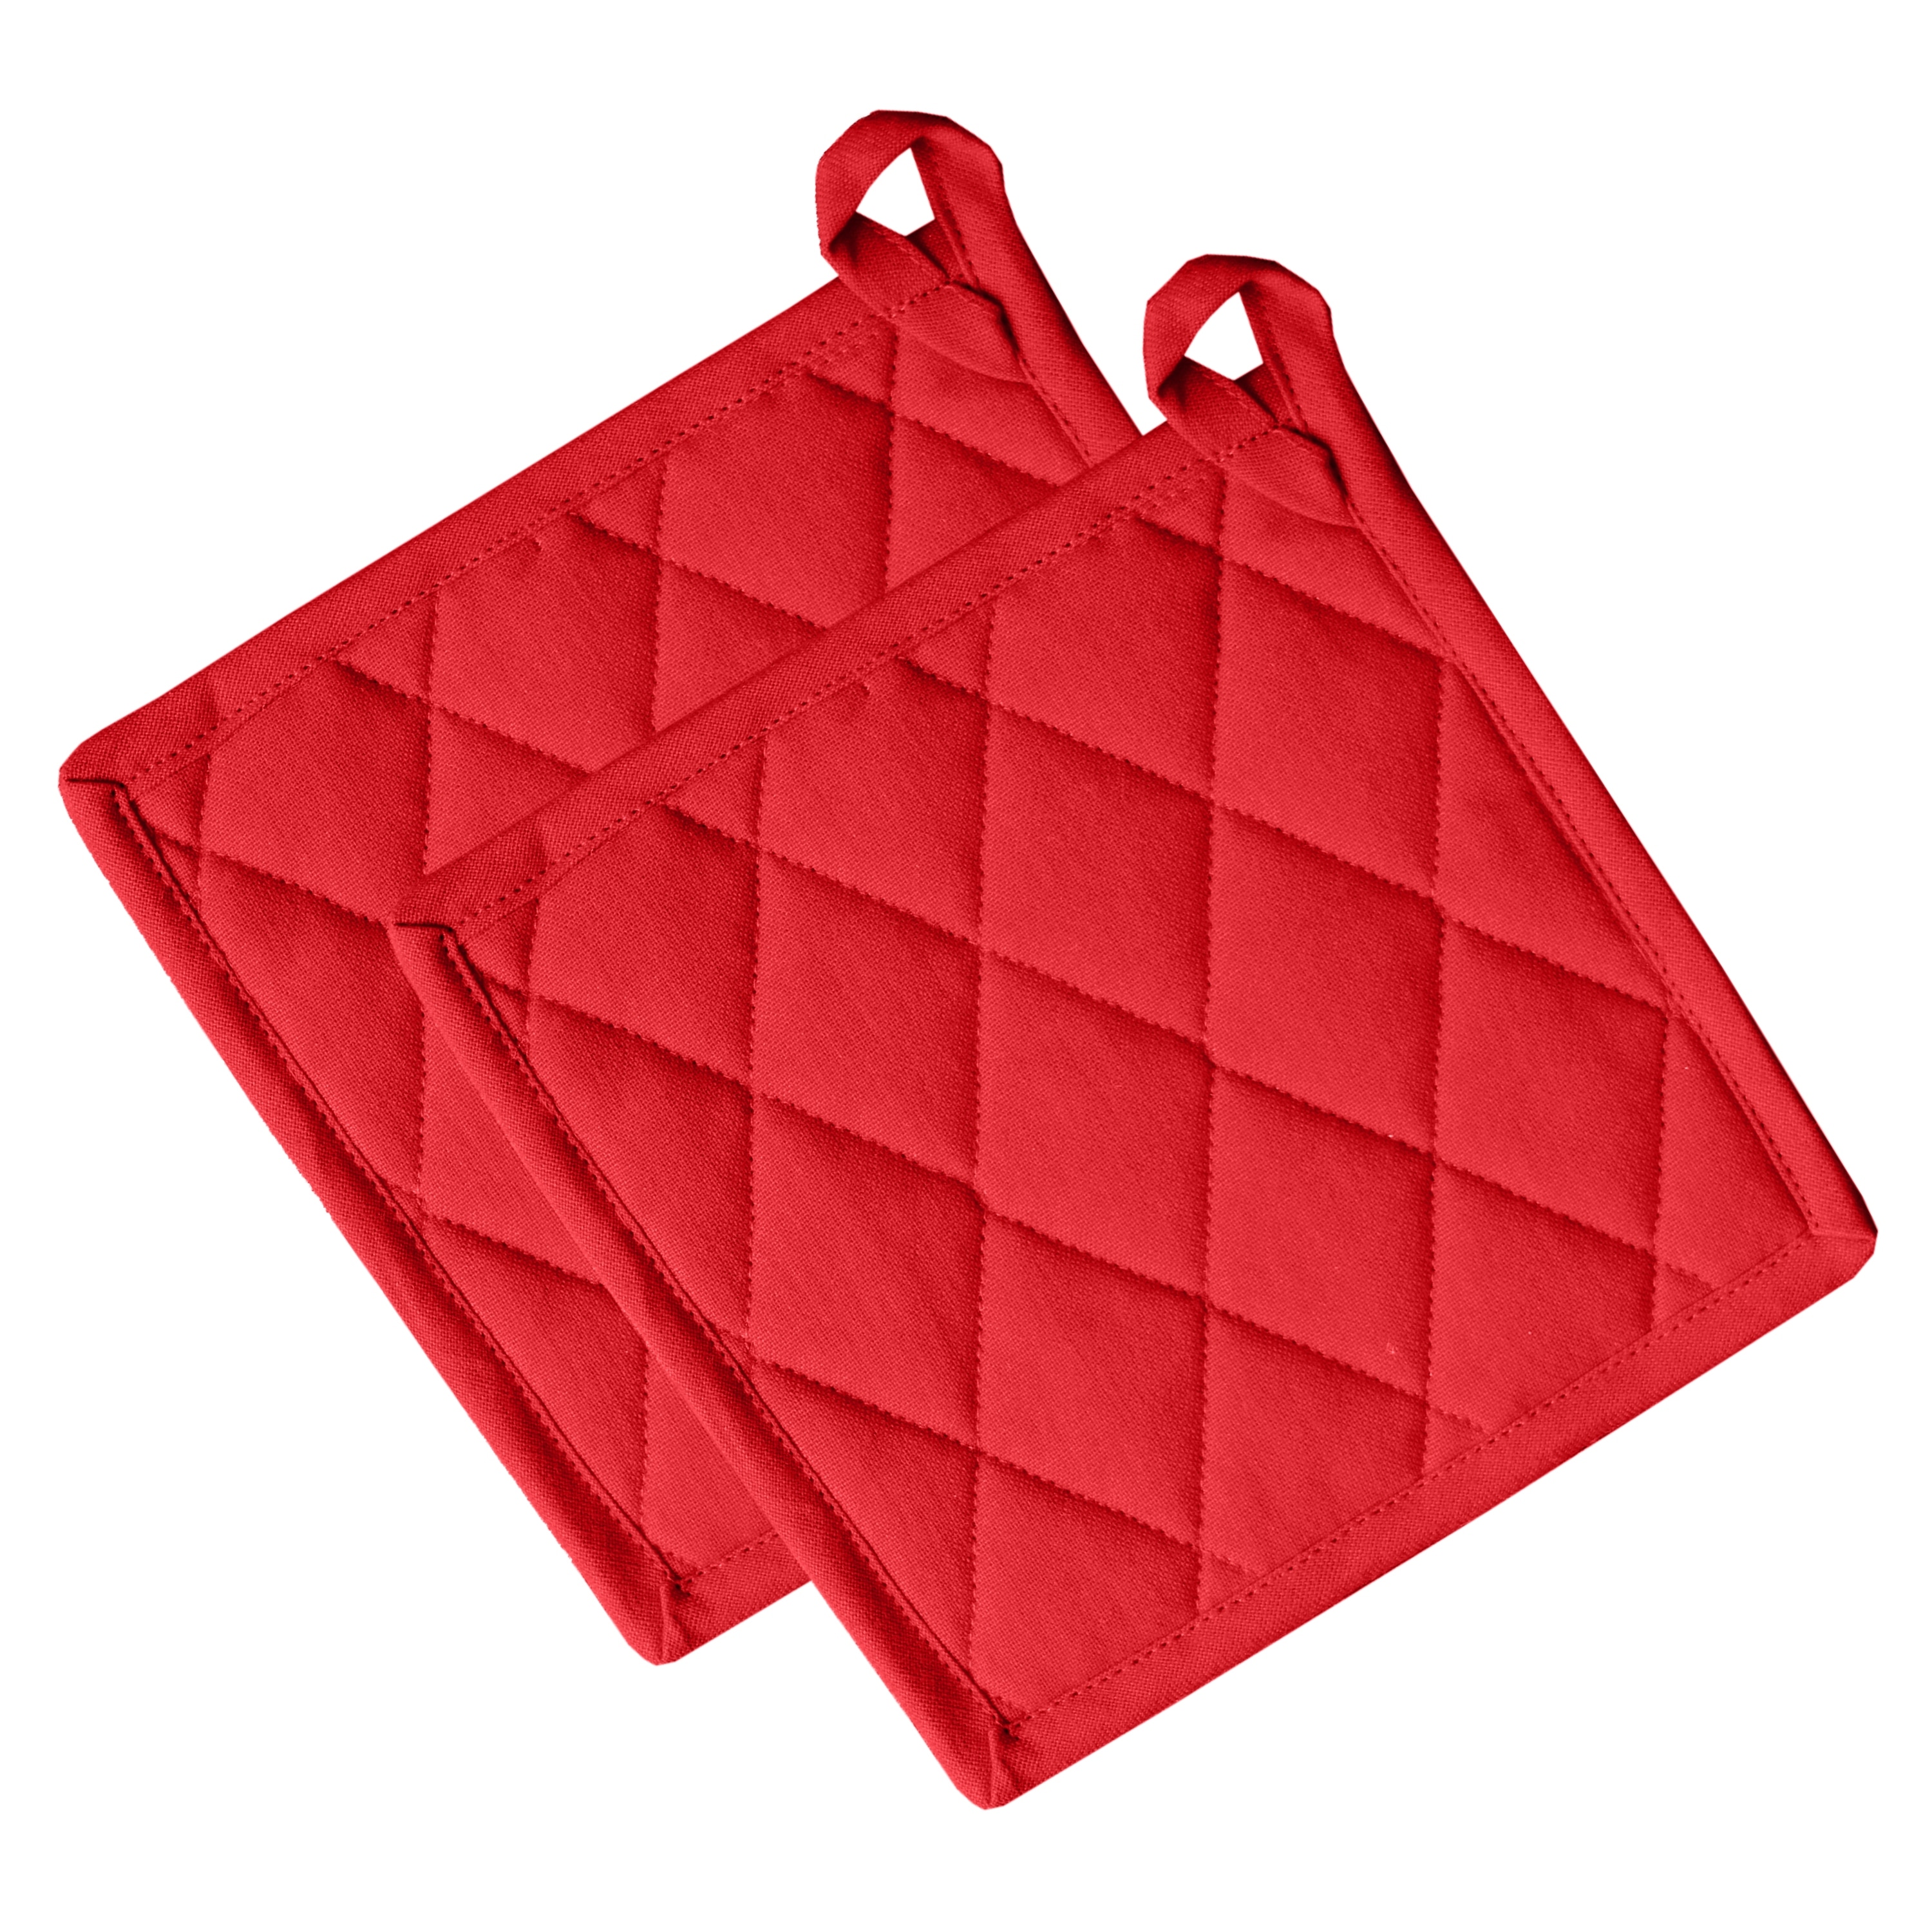 DII Red Terry Potholder (Set of 3) - Heat Resistant Cloth Pot